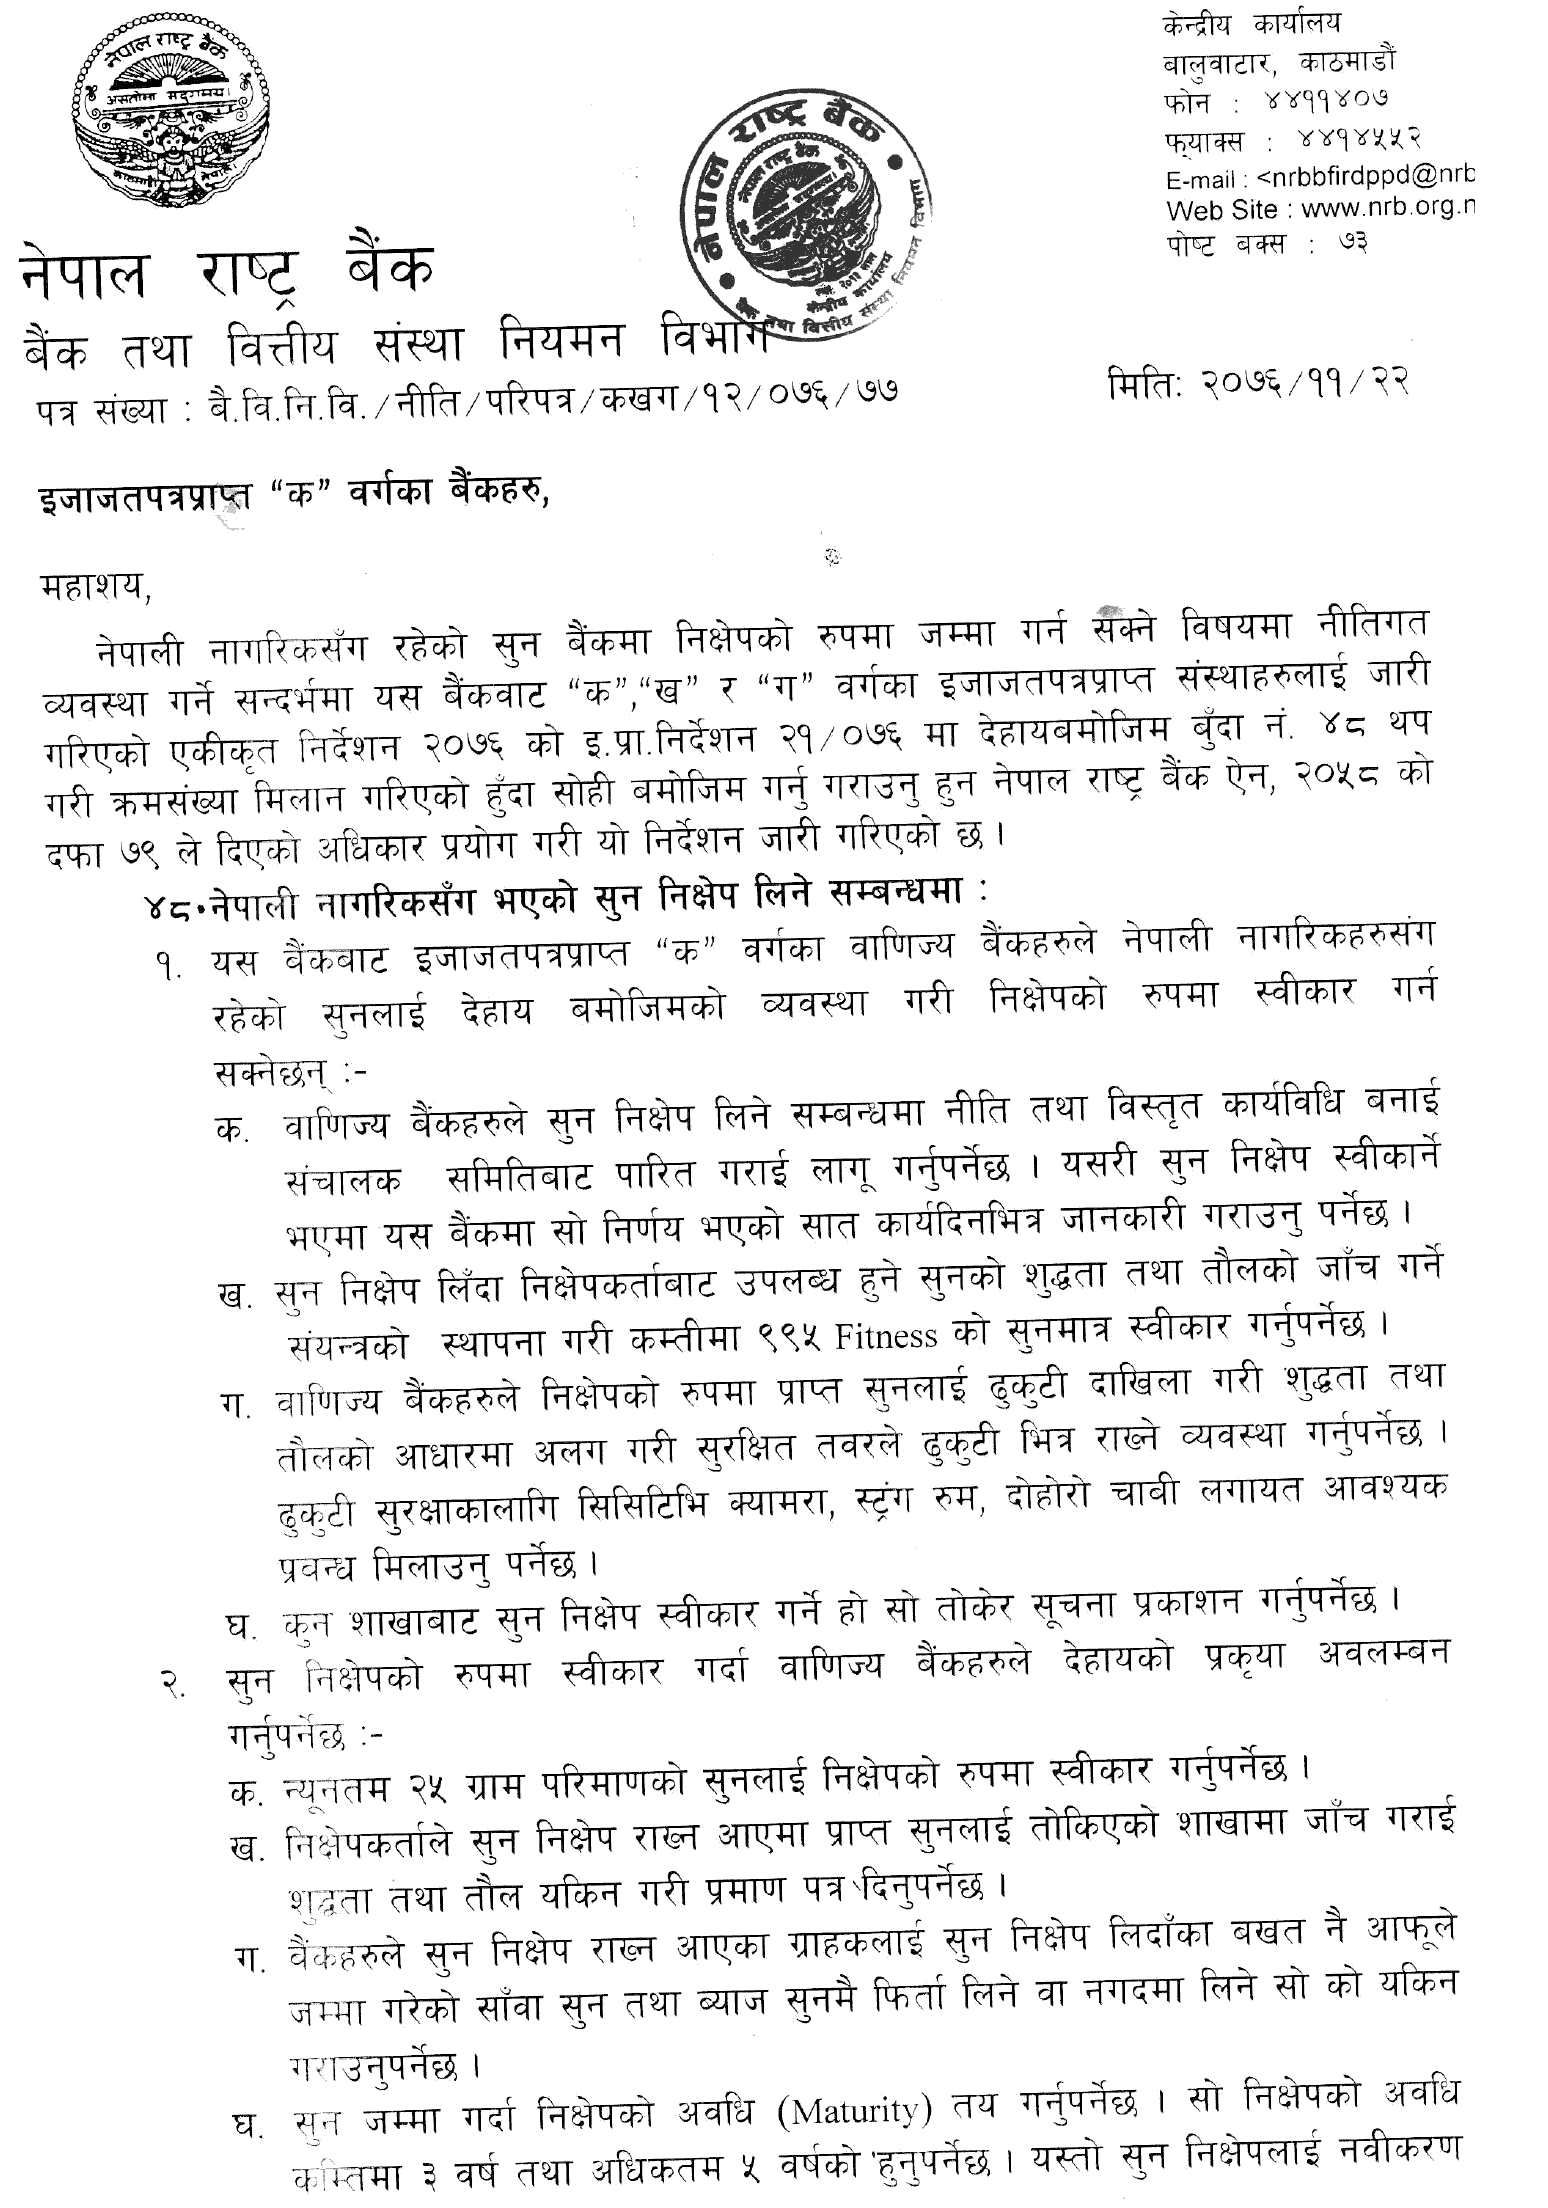 Nepal Rastra Bank Notice Regarding Gold Monetisation Scheme 1